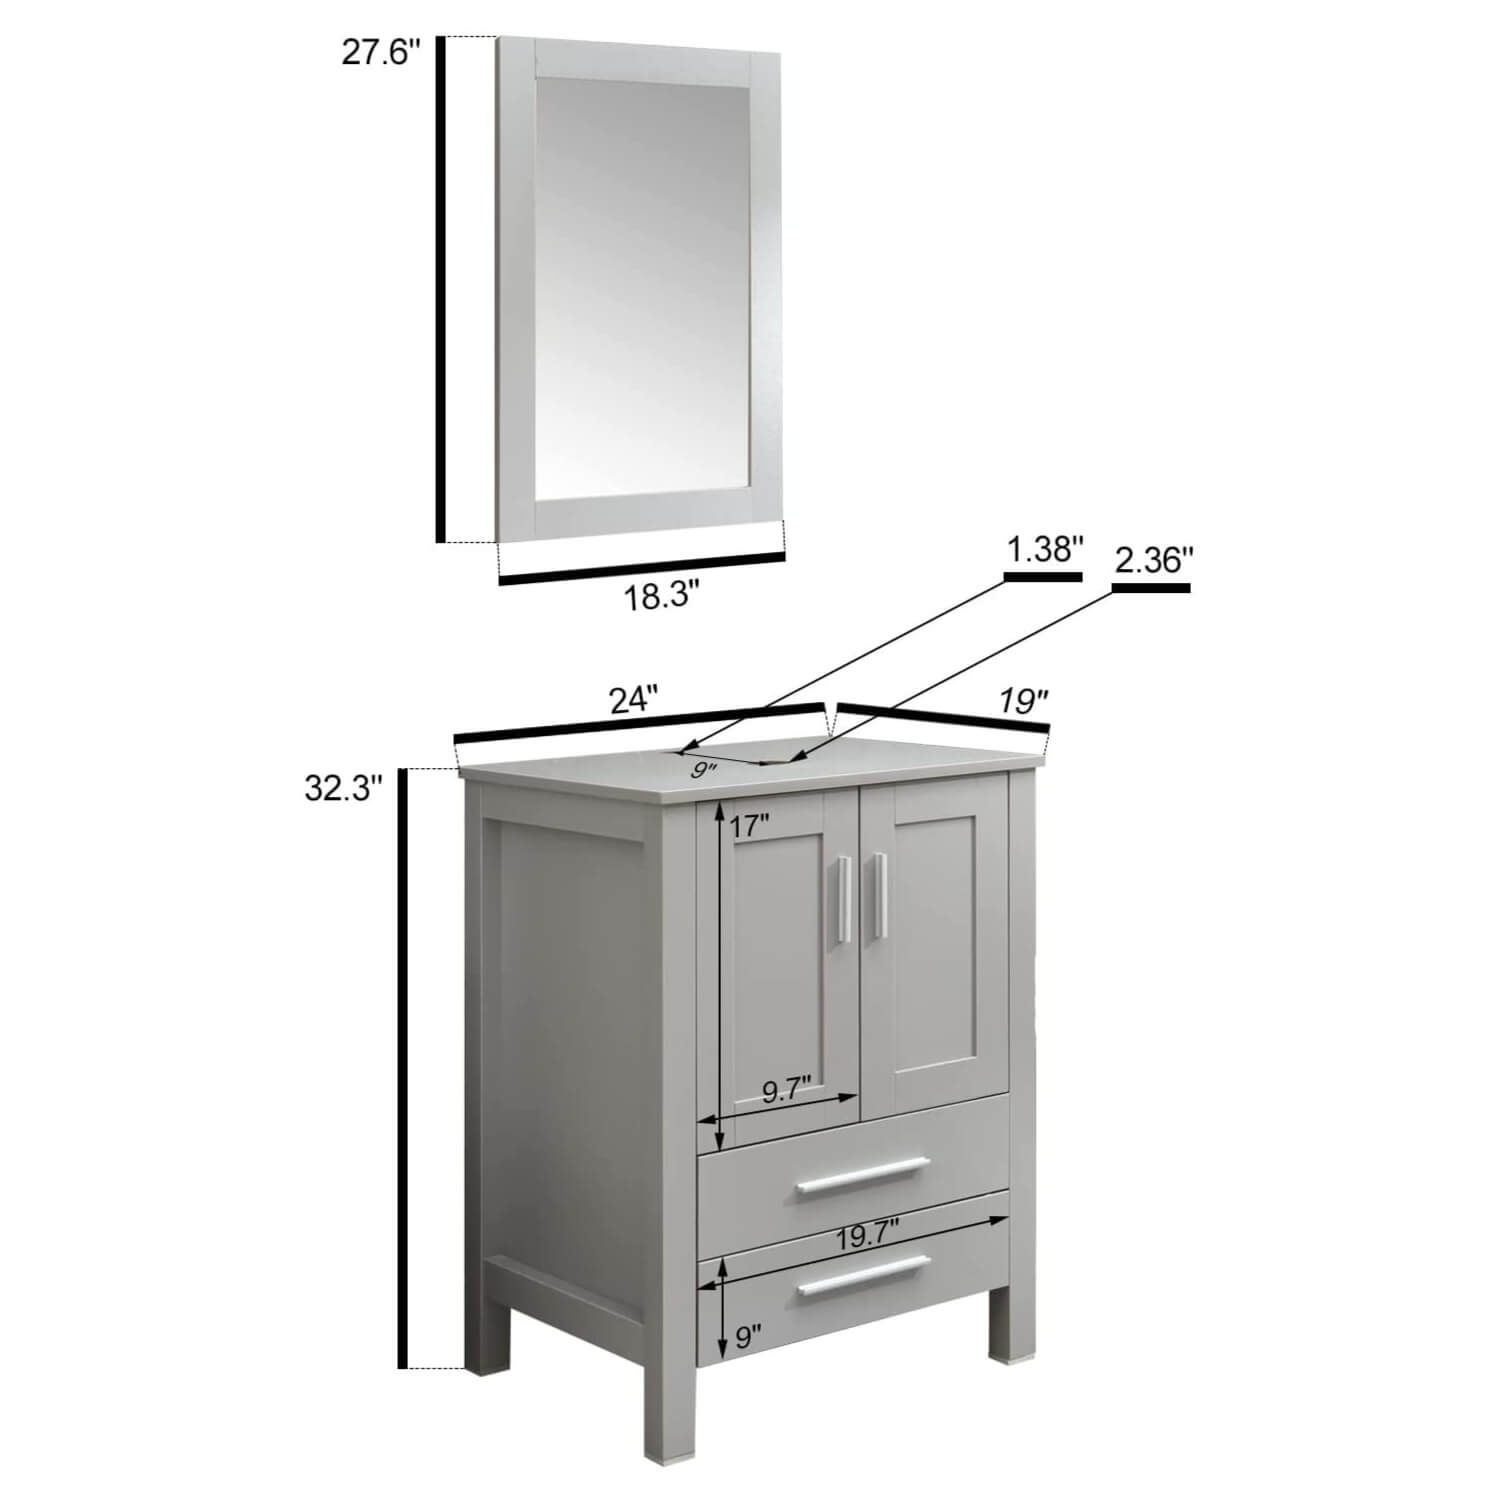 Elecwish 24-Inch Bathroom Vanity, Modern Wood Fixture Stand Pedestal Cabinet with Mirror, Grey size